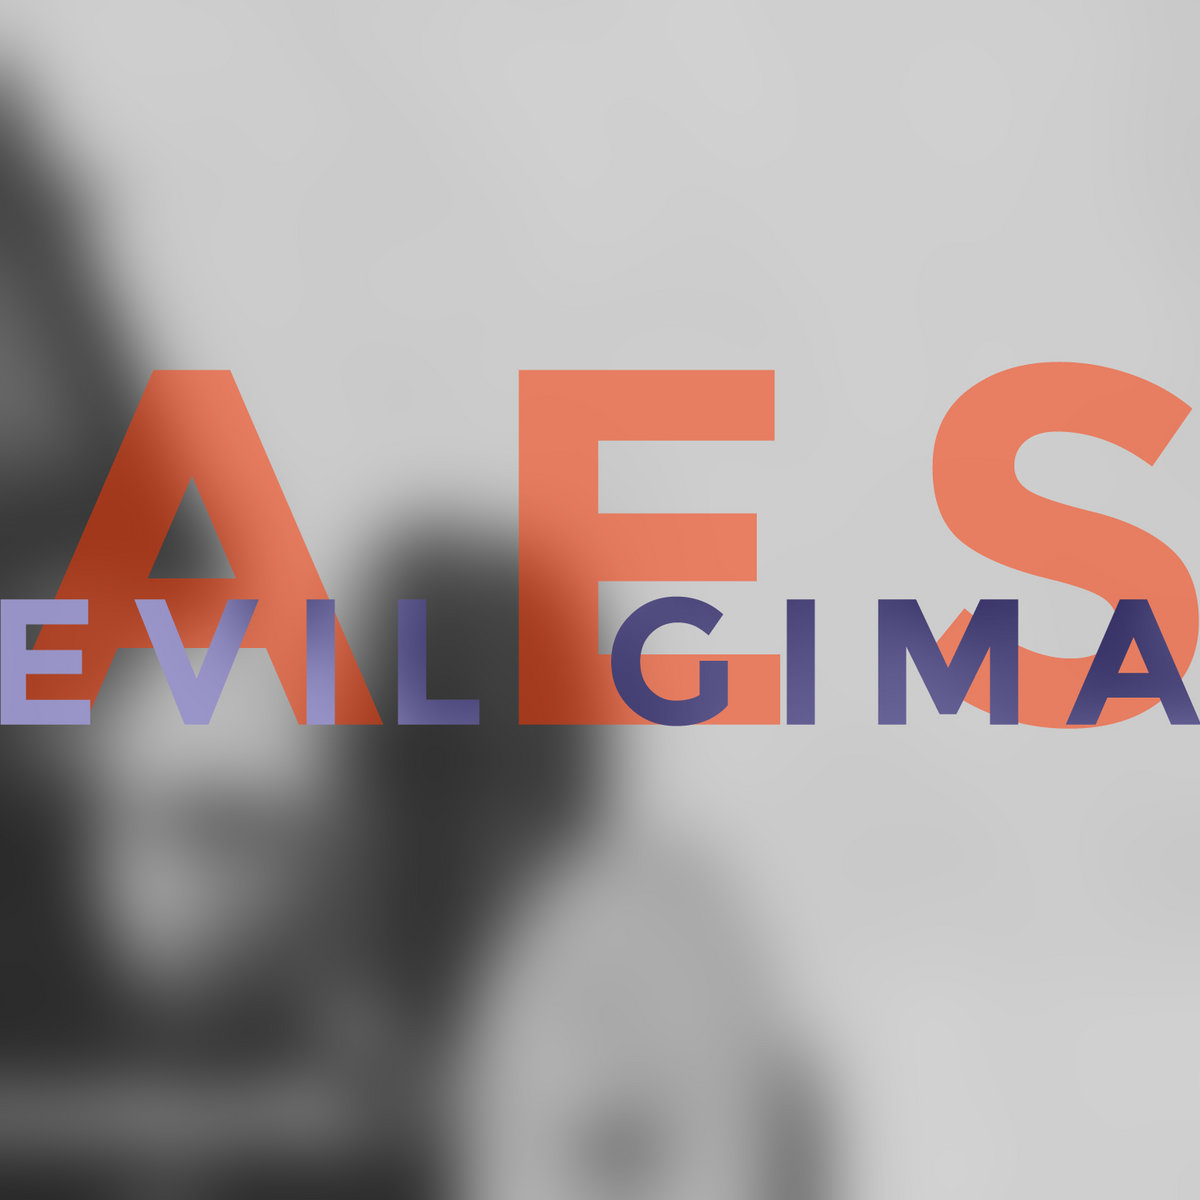 Evil Gima - AES